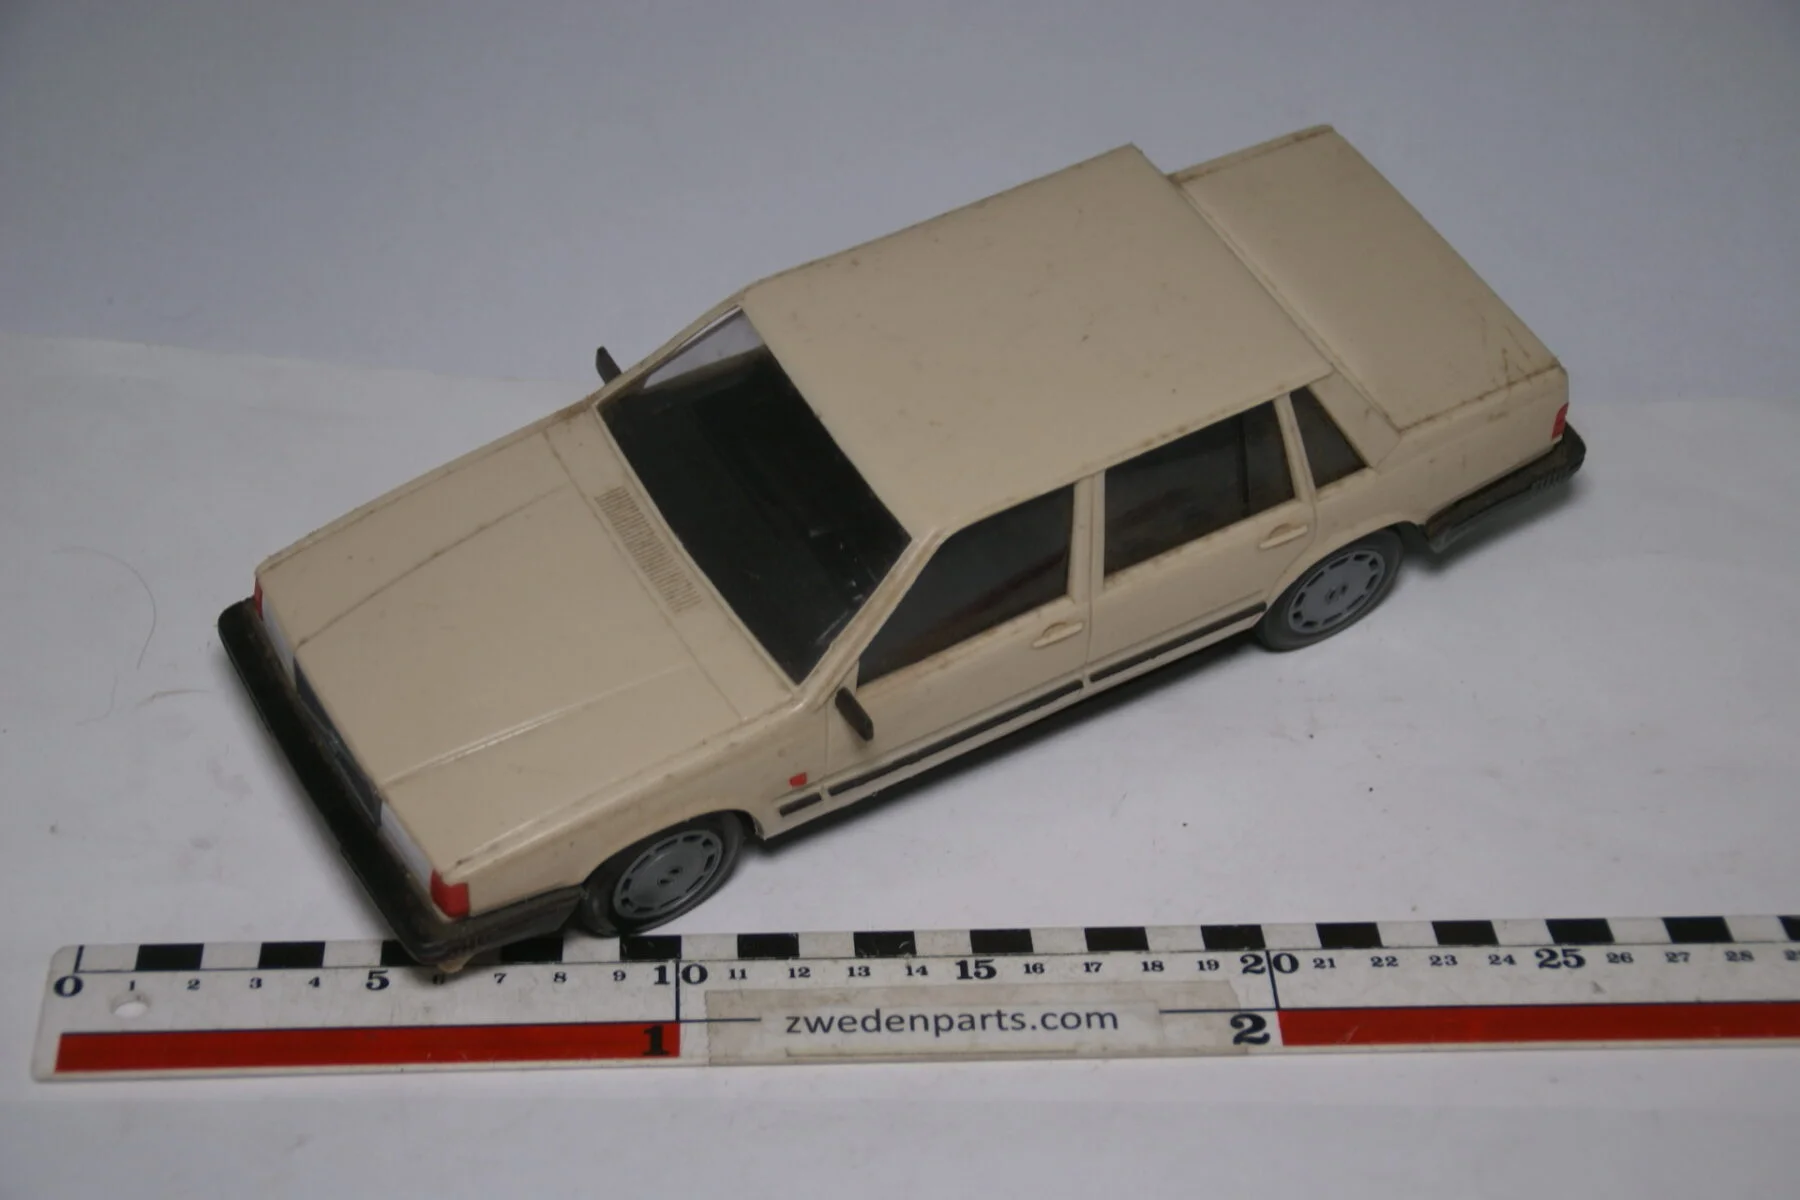 DSC09150 miniatuur Stahlberg Made in Finland Volvo 760GLE wit ca 1 op 18